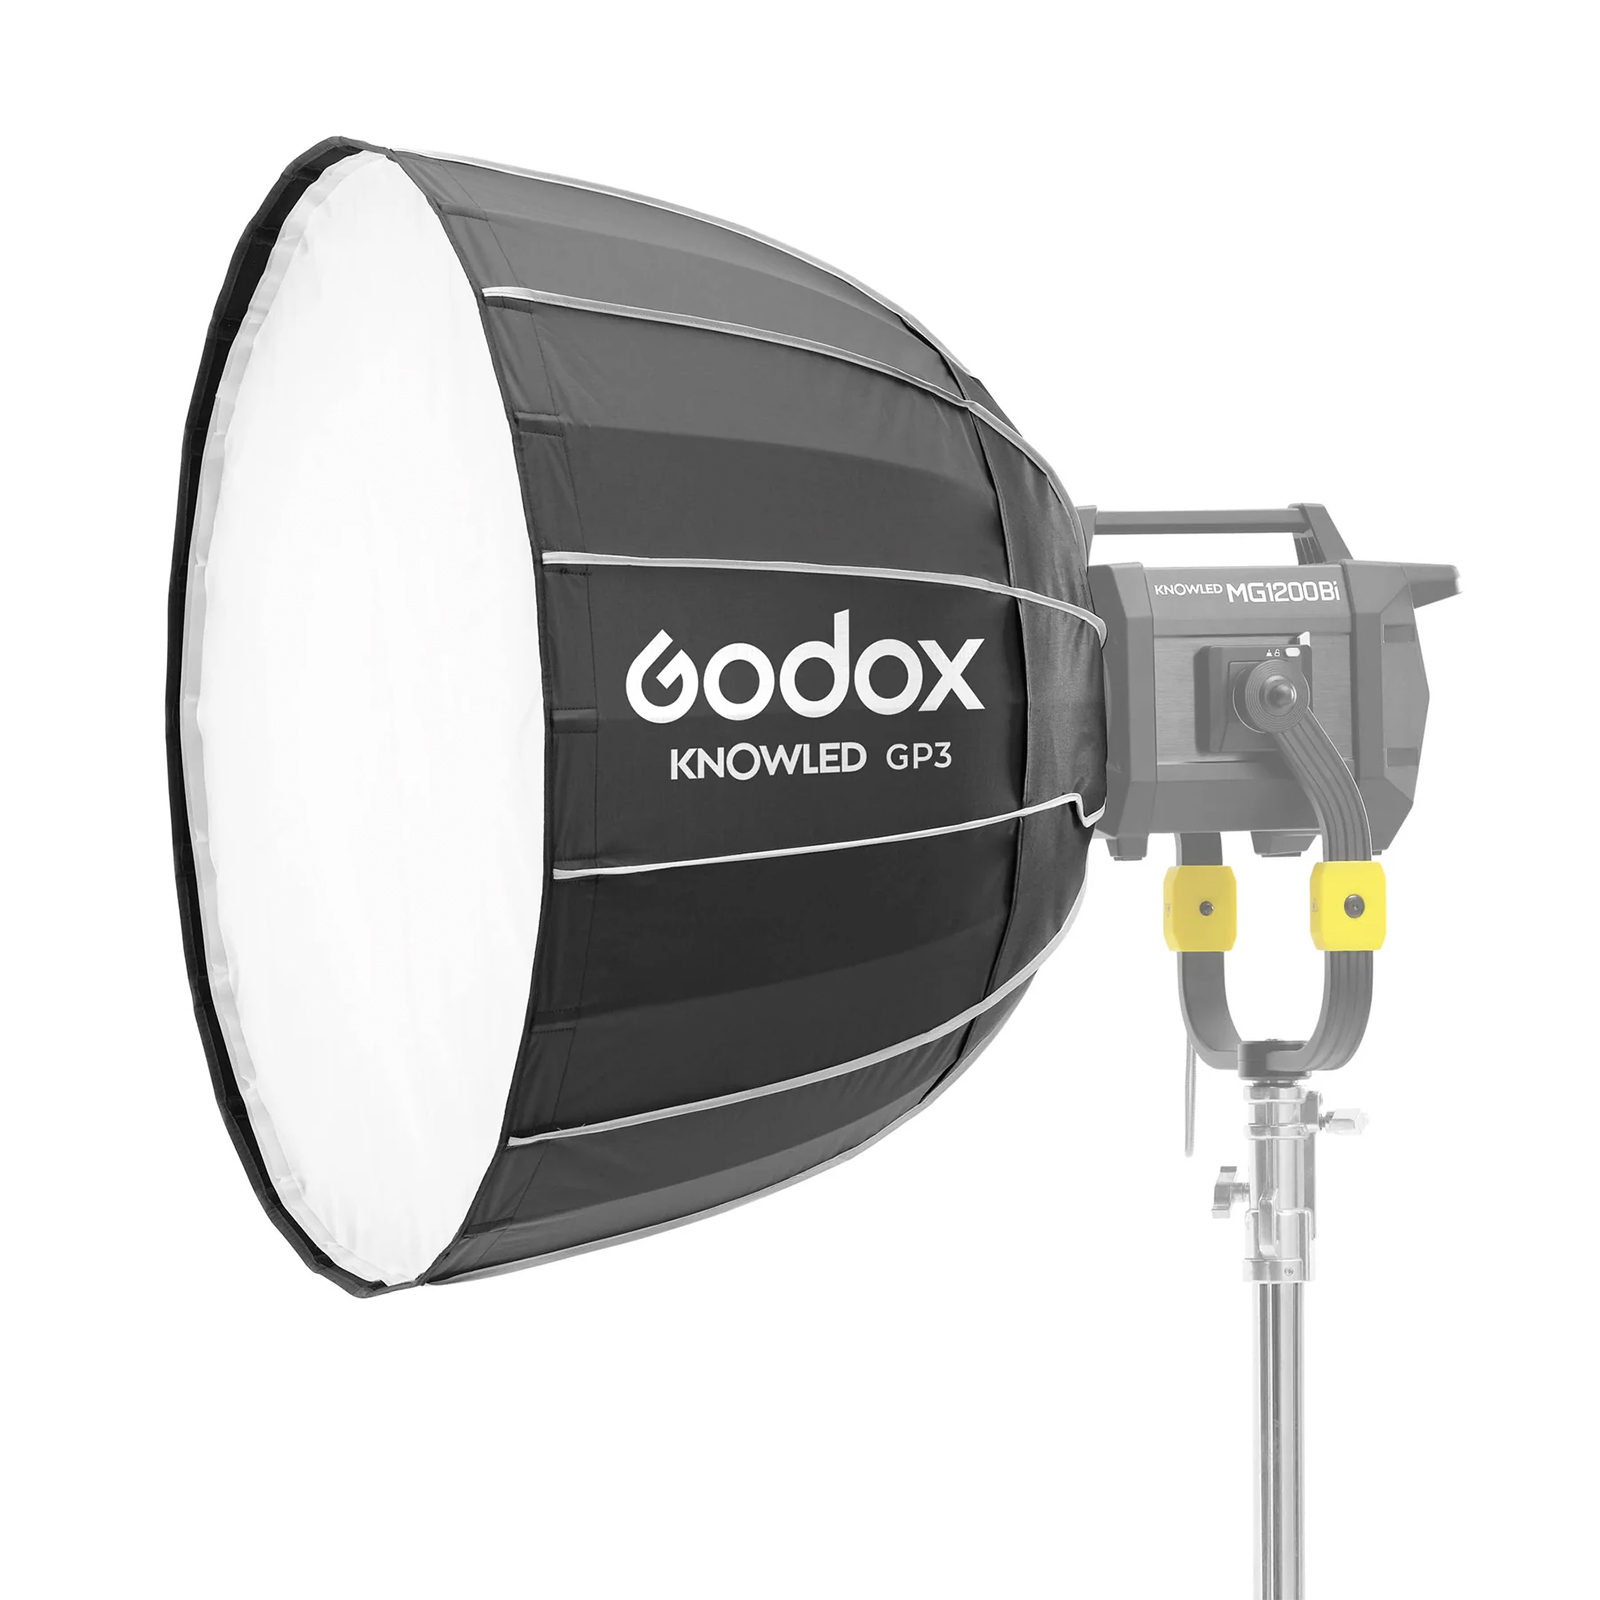 Image of Godox GP3 Parabolic Softbox 90 For MG1200BI